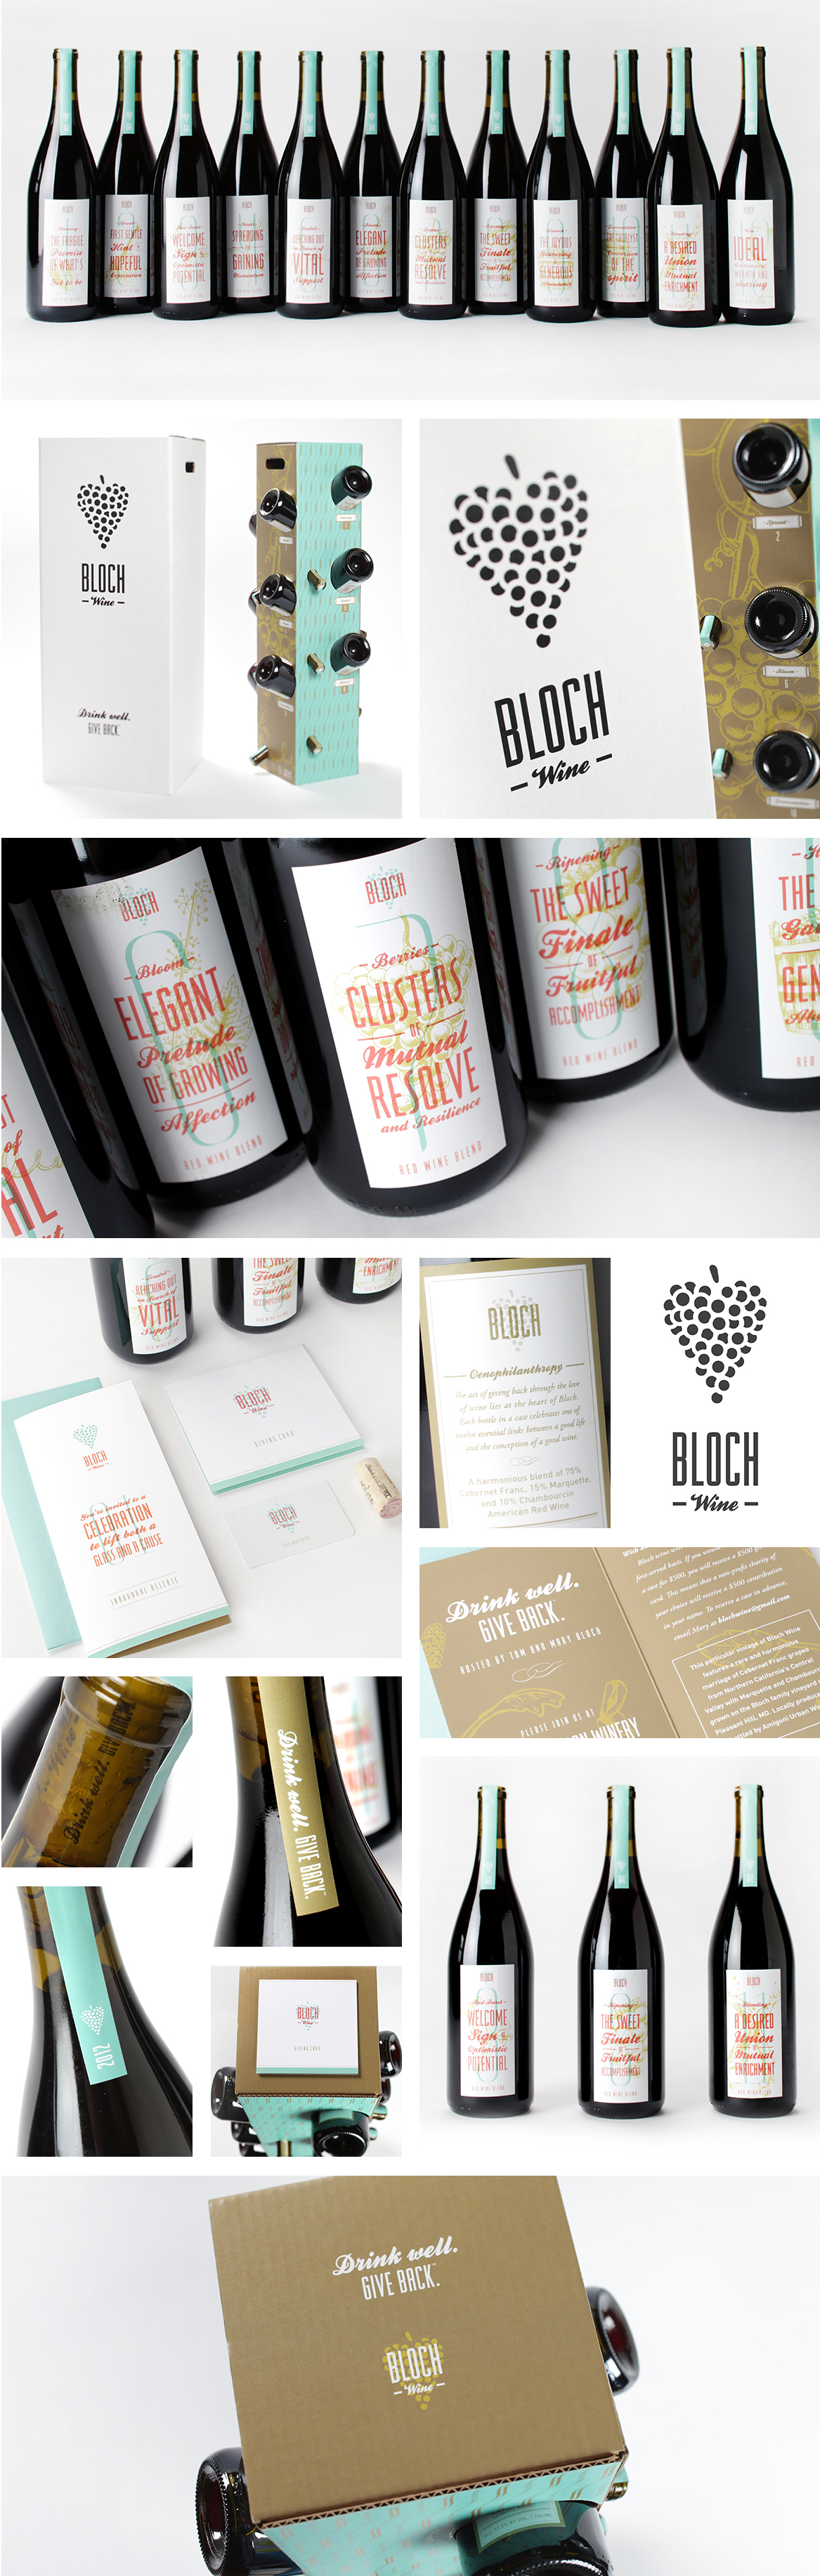 pro bono wine liquor Spirits bottle series charity give back drink winery Label wine rack storytelling  